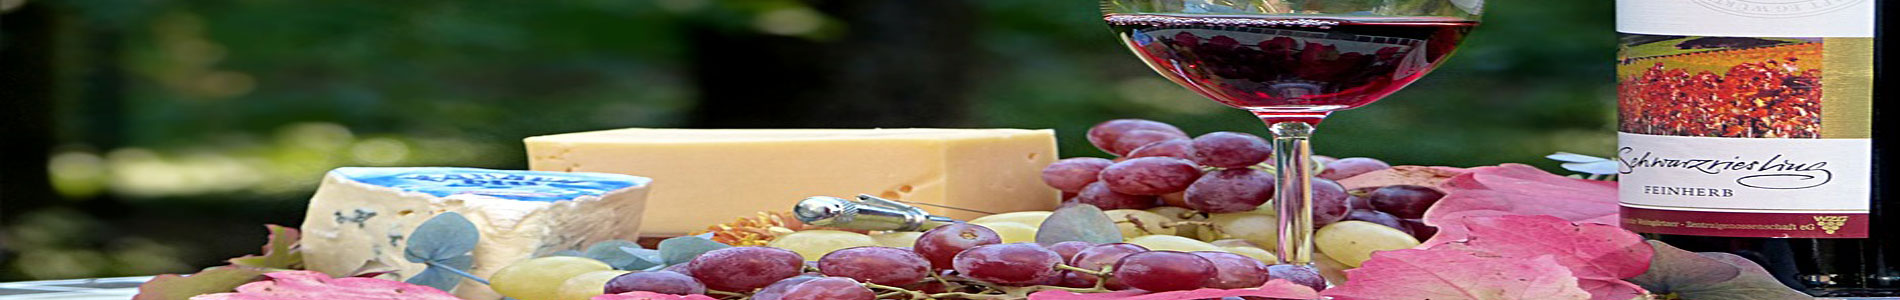 Hard cheese - Mark's Cheese Counter